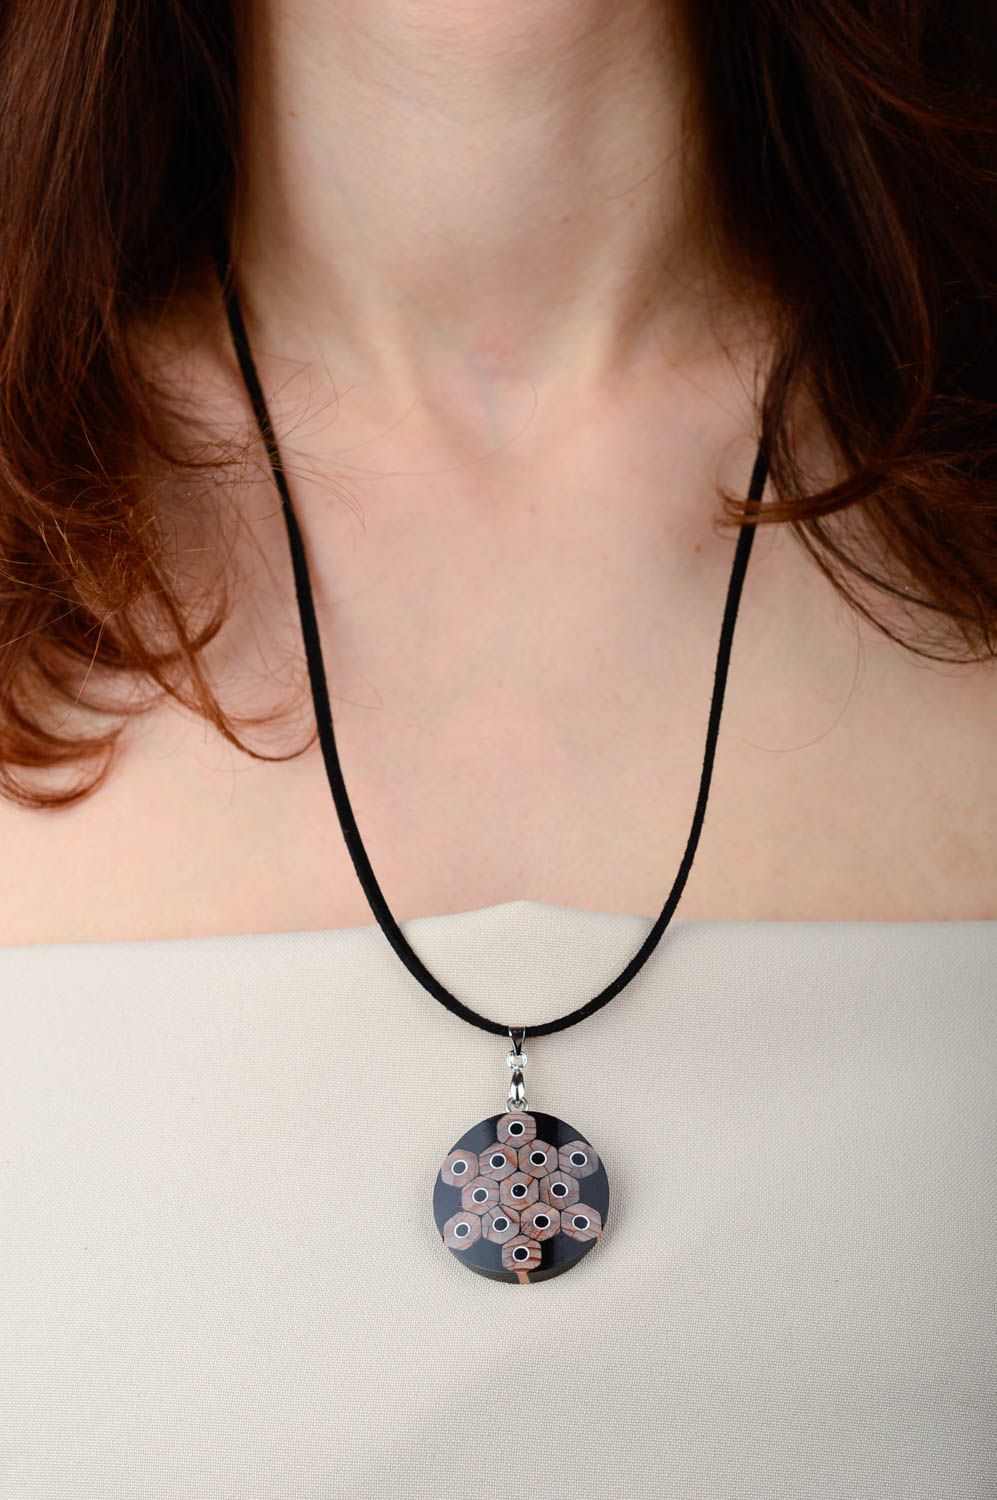 Handmade pendant unusual neck accessory gift ideas wooden pendant designer gift photo 2